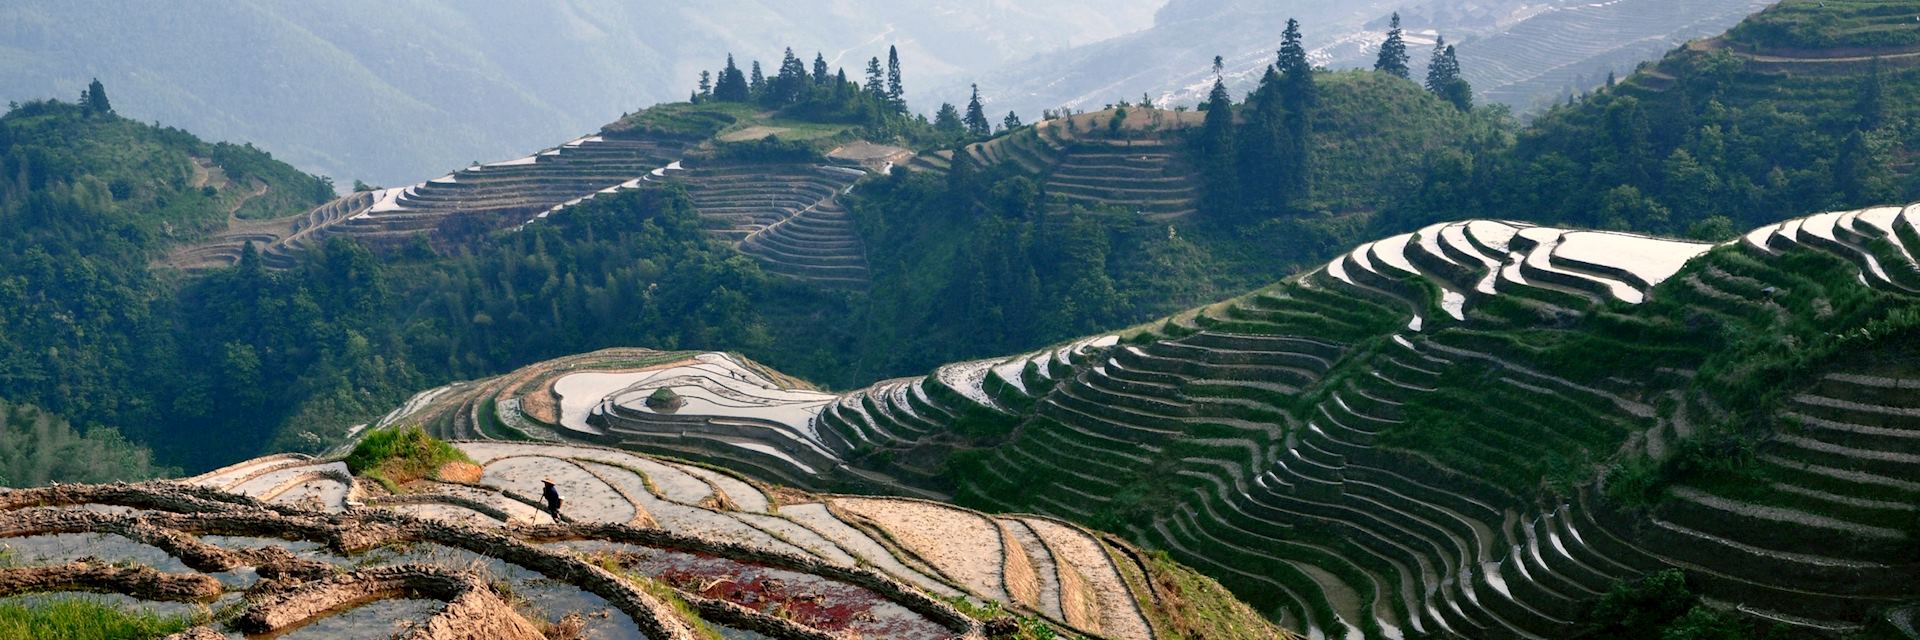 Rice_terraces_China